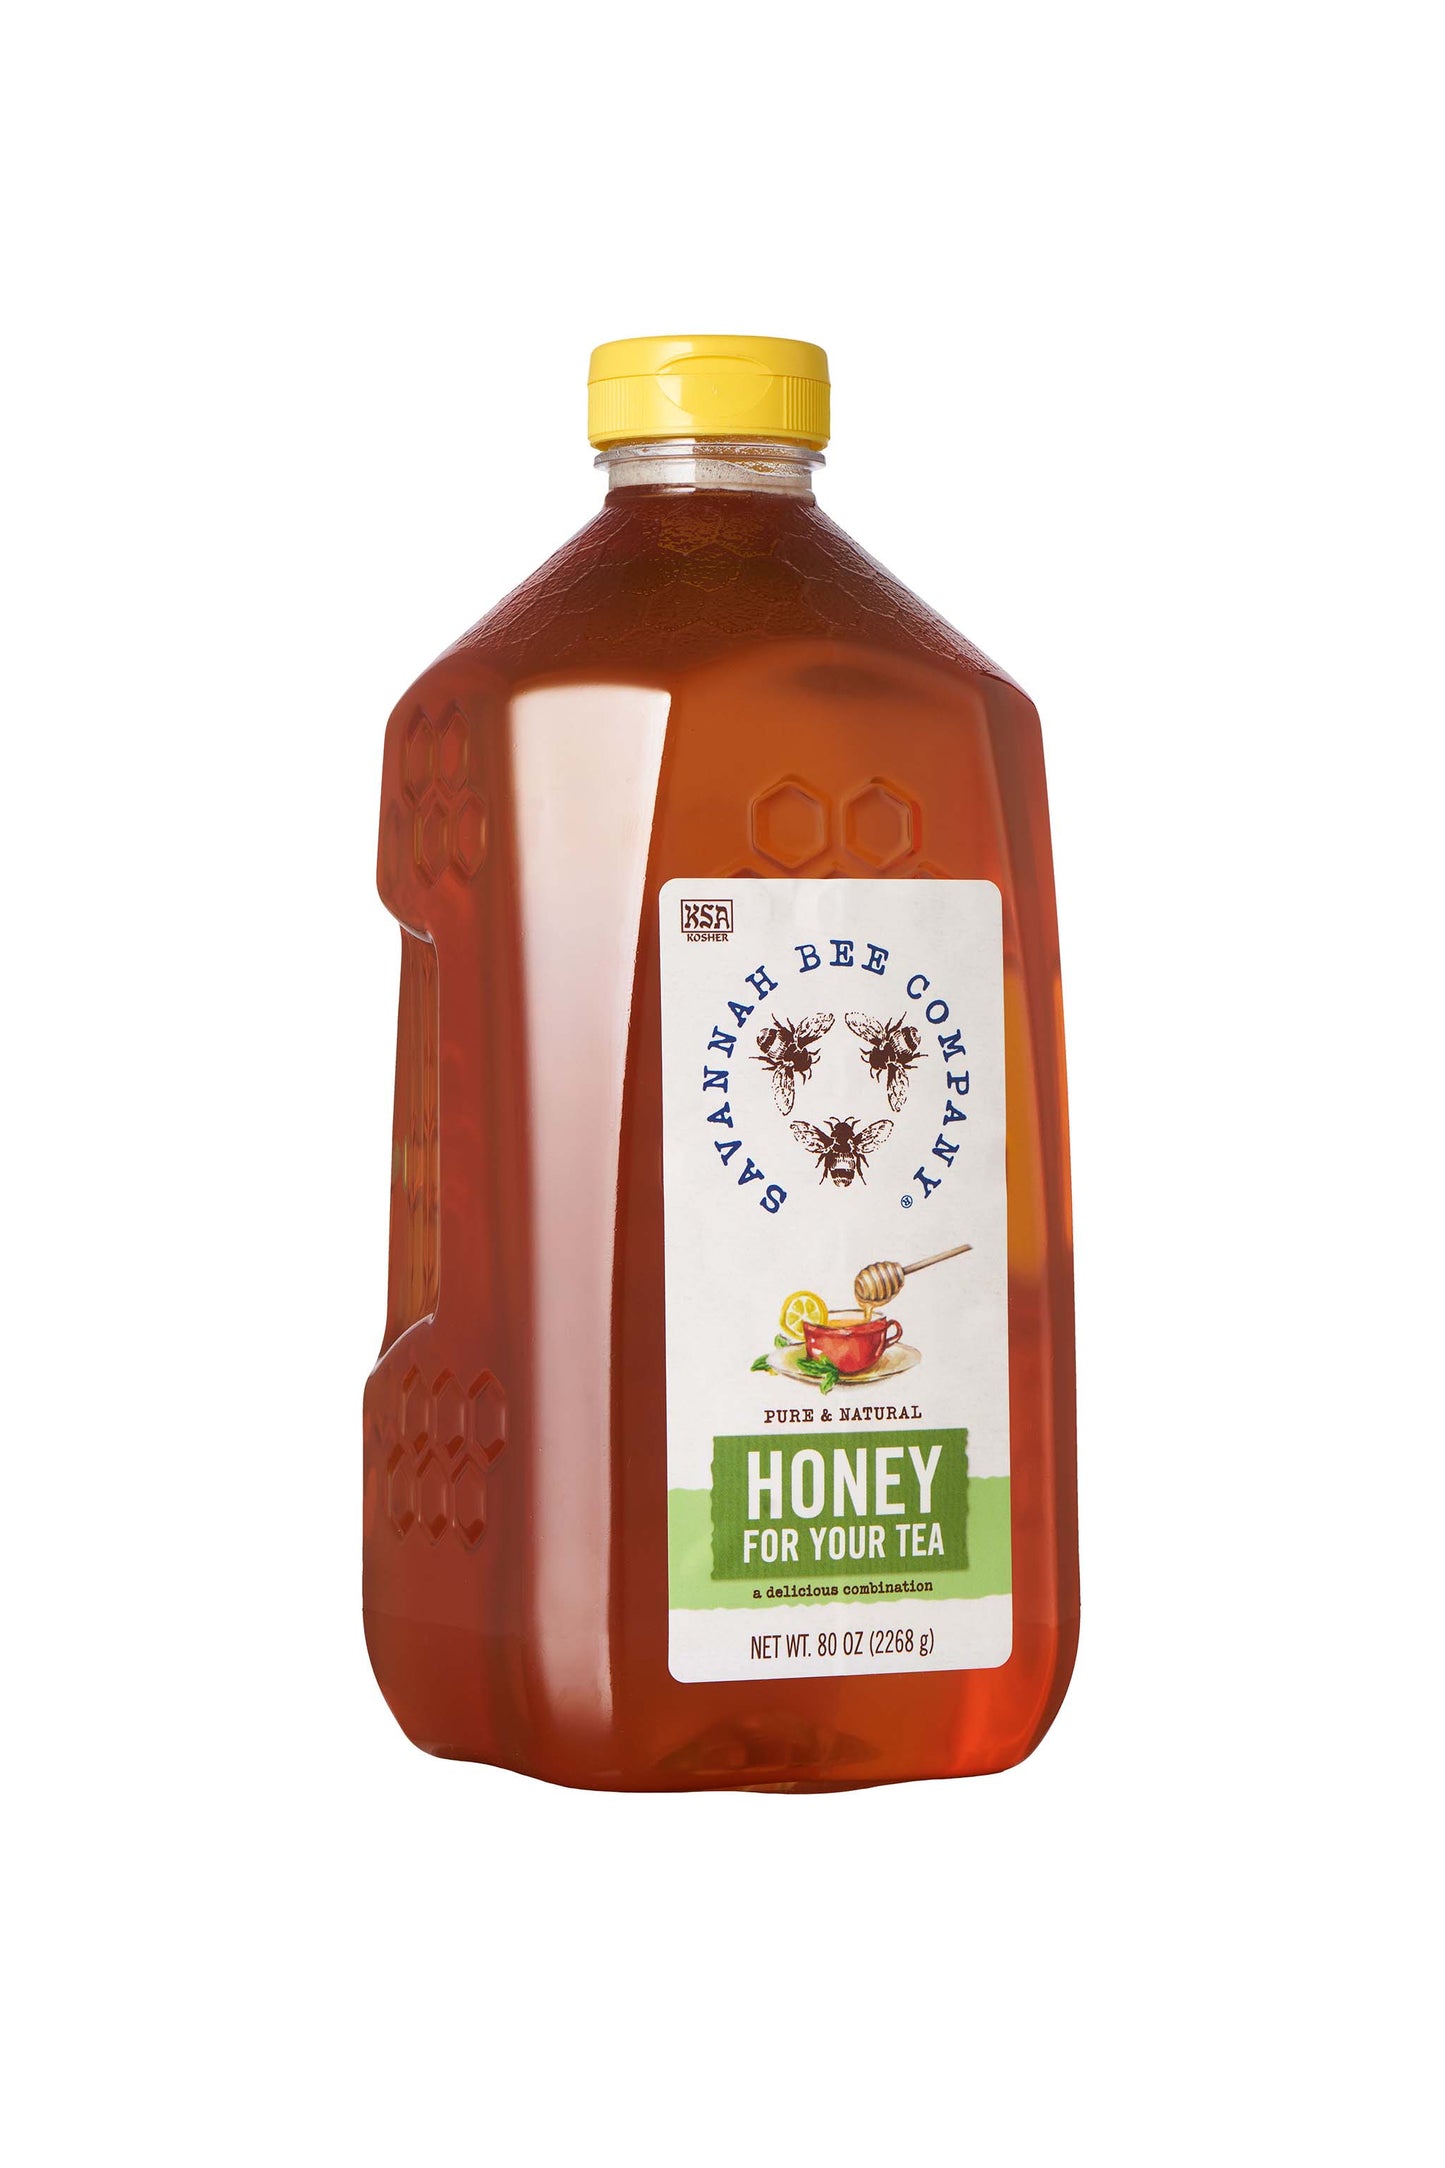 Honey for tea 80 ounce just studio shot.